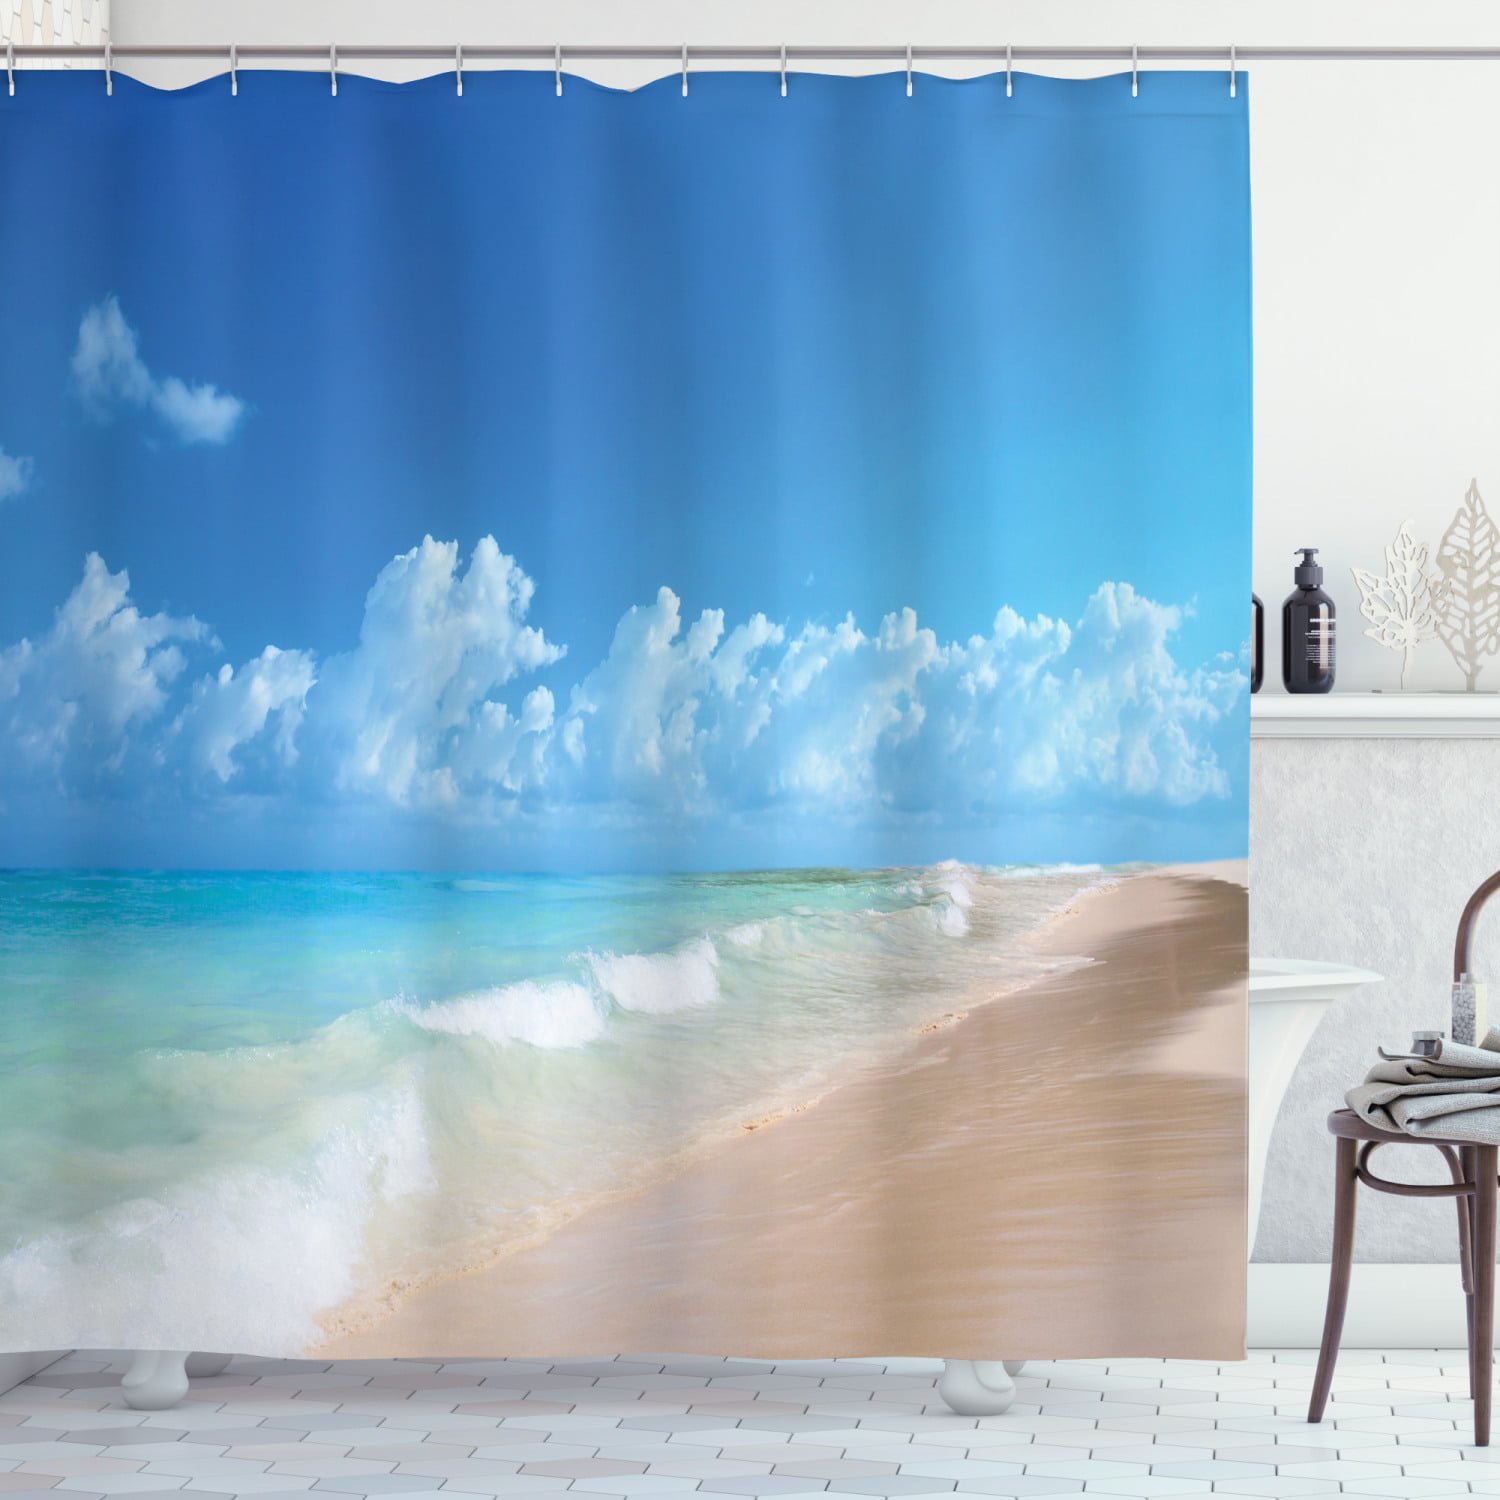 Summer Holidays in Beach Seashore Shower Curtain Set Bathroom Polyester Fabric 